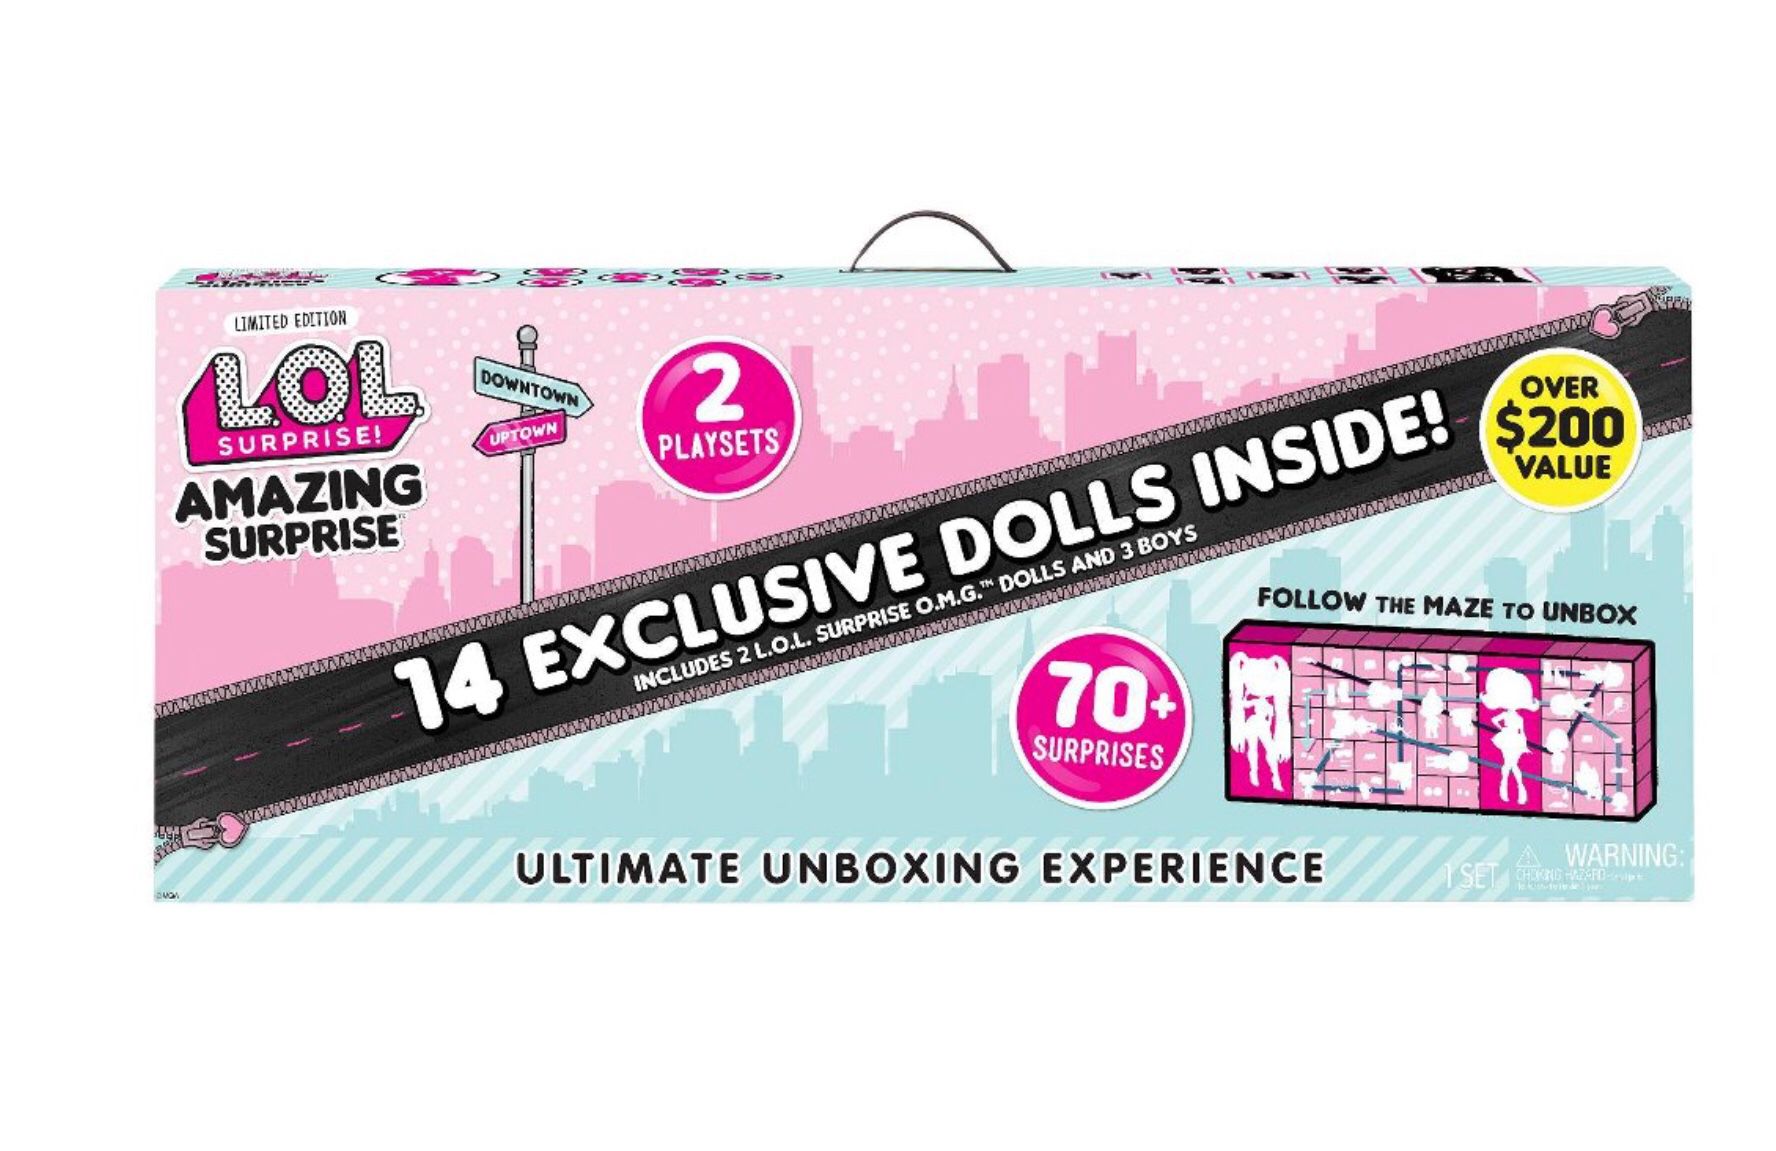 LOL Suprise! Amazing Surprise with 14 Dolls & 70+ Surprises